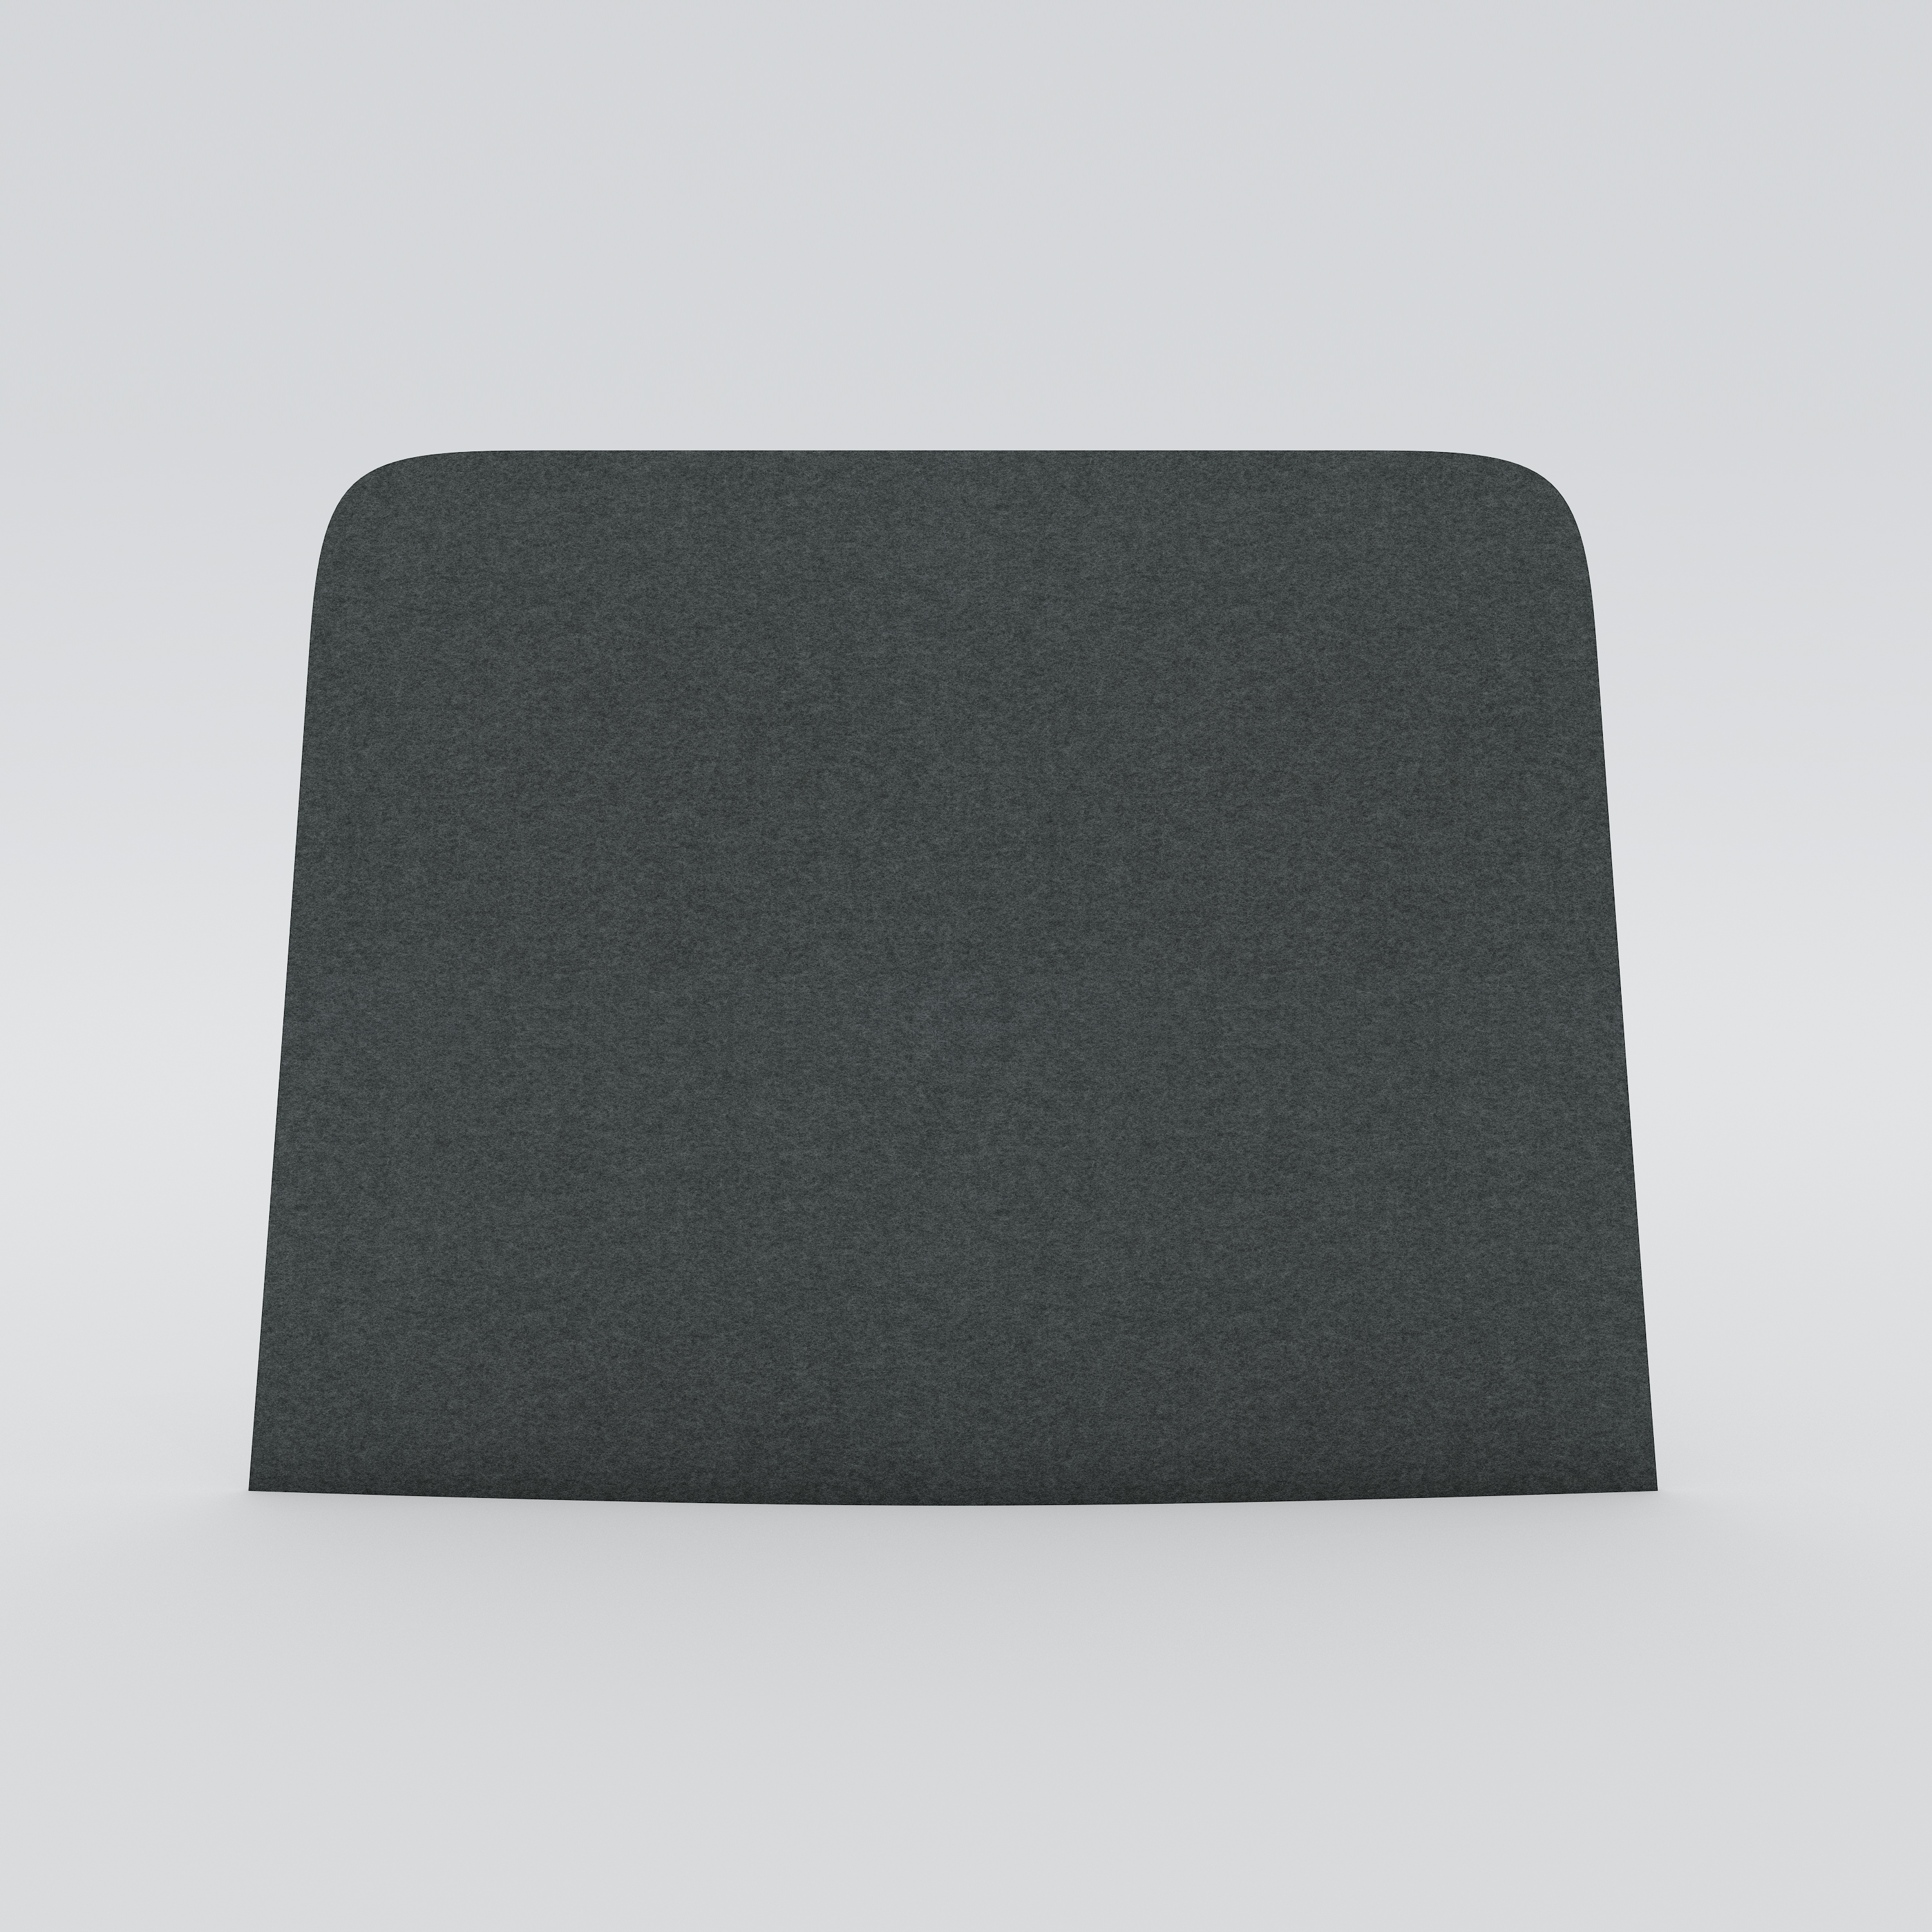 Table screen Ease, gray felt upholstery, 600x450